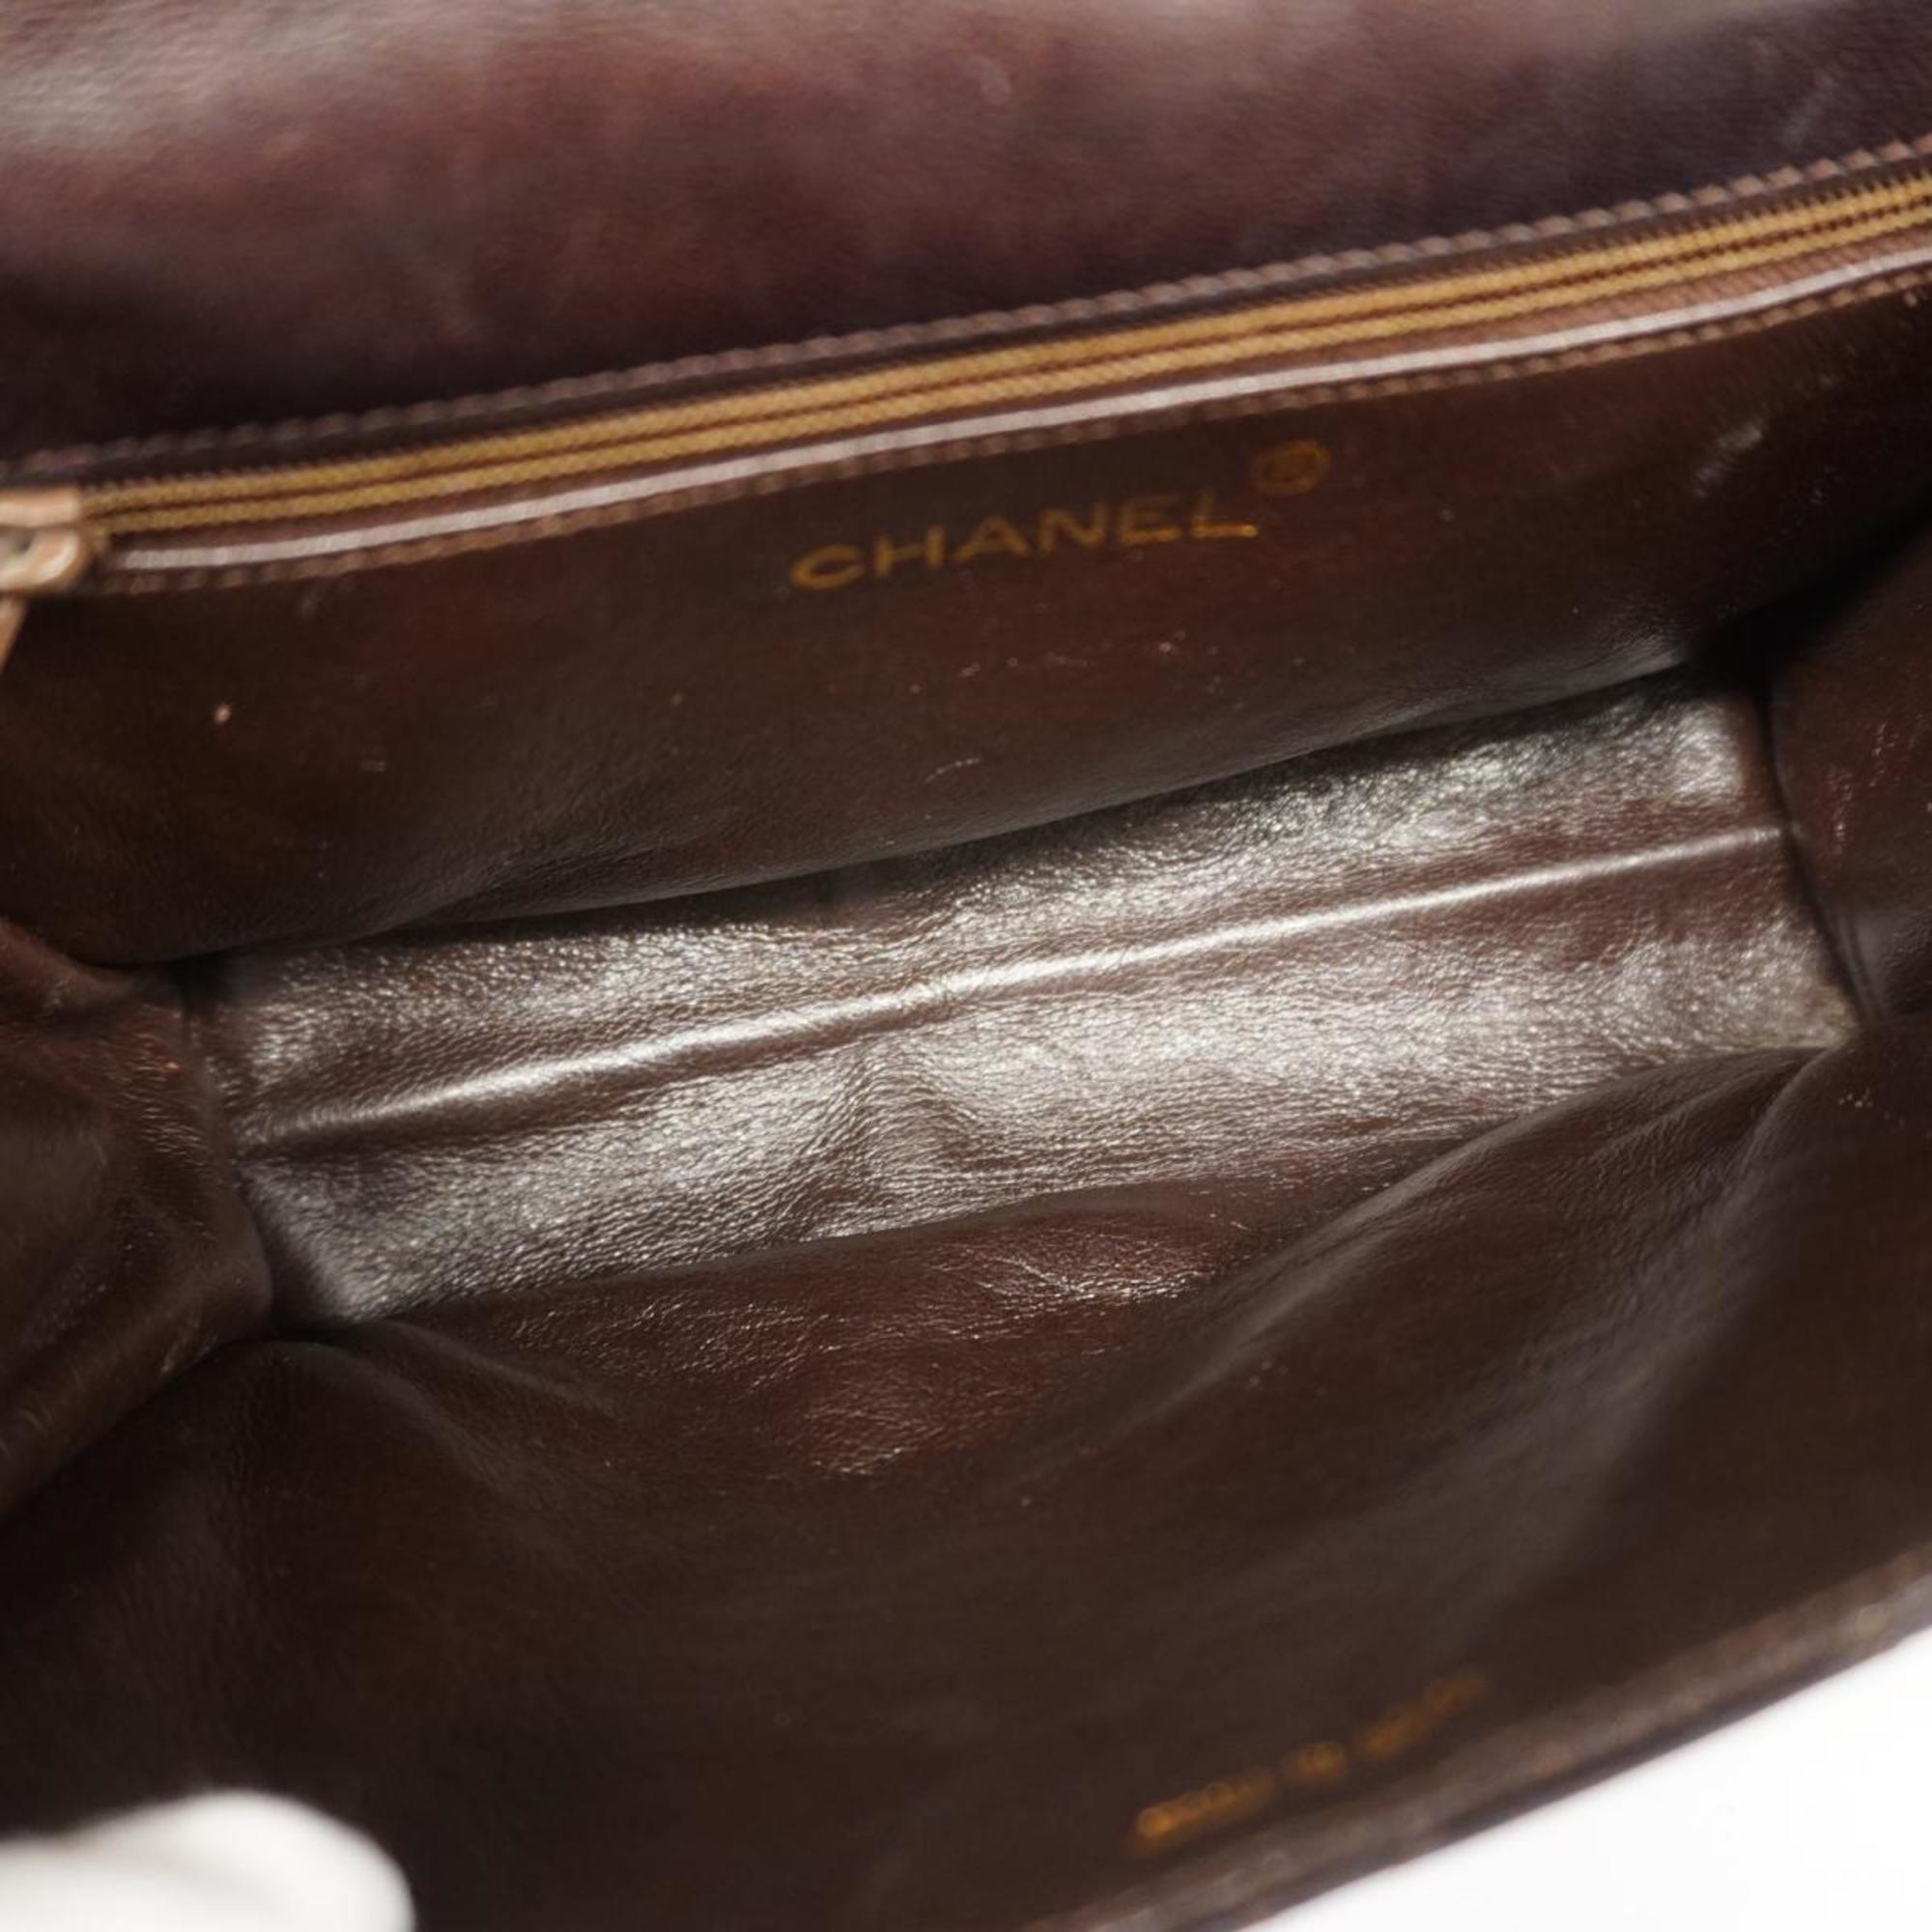 Chanel clutch bag, matelassé, lambskin, brown, women's